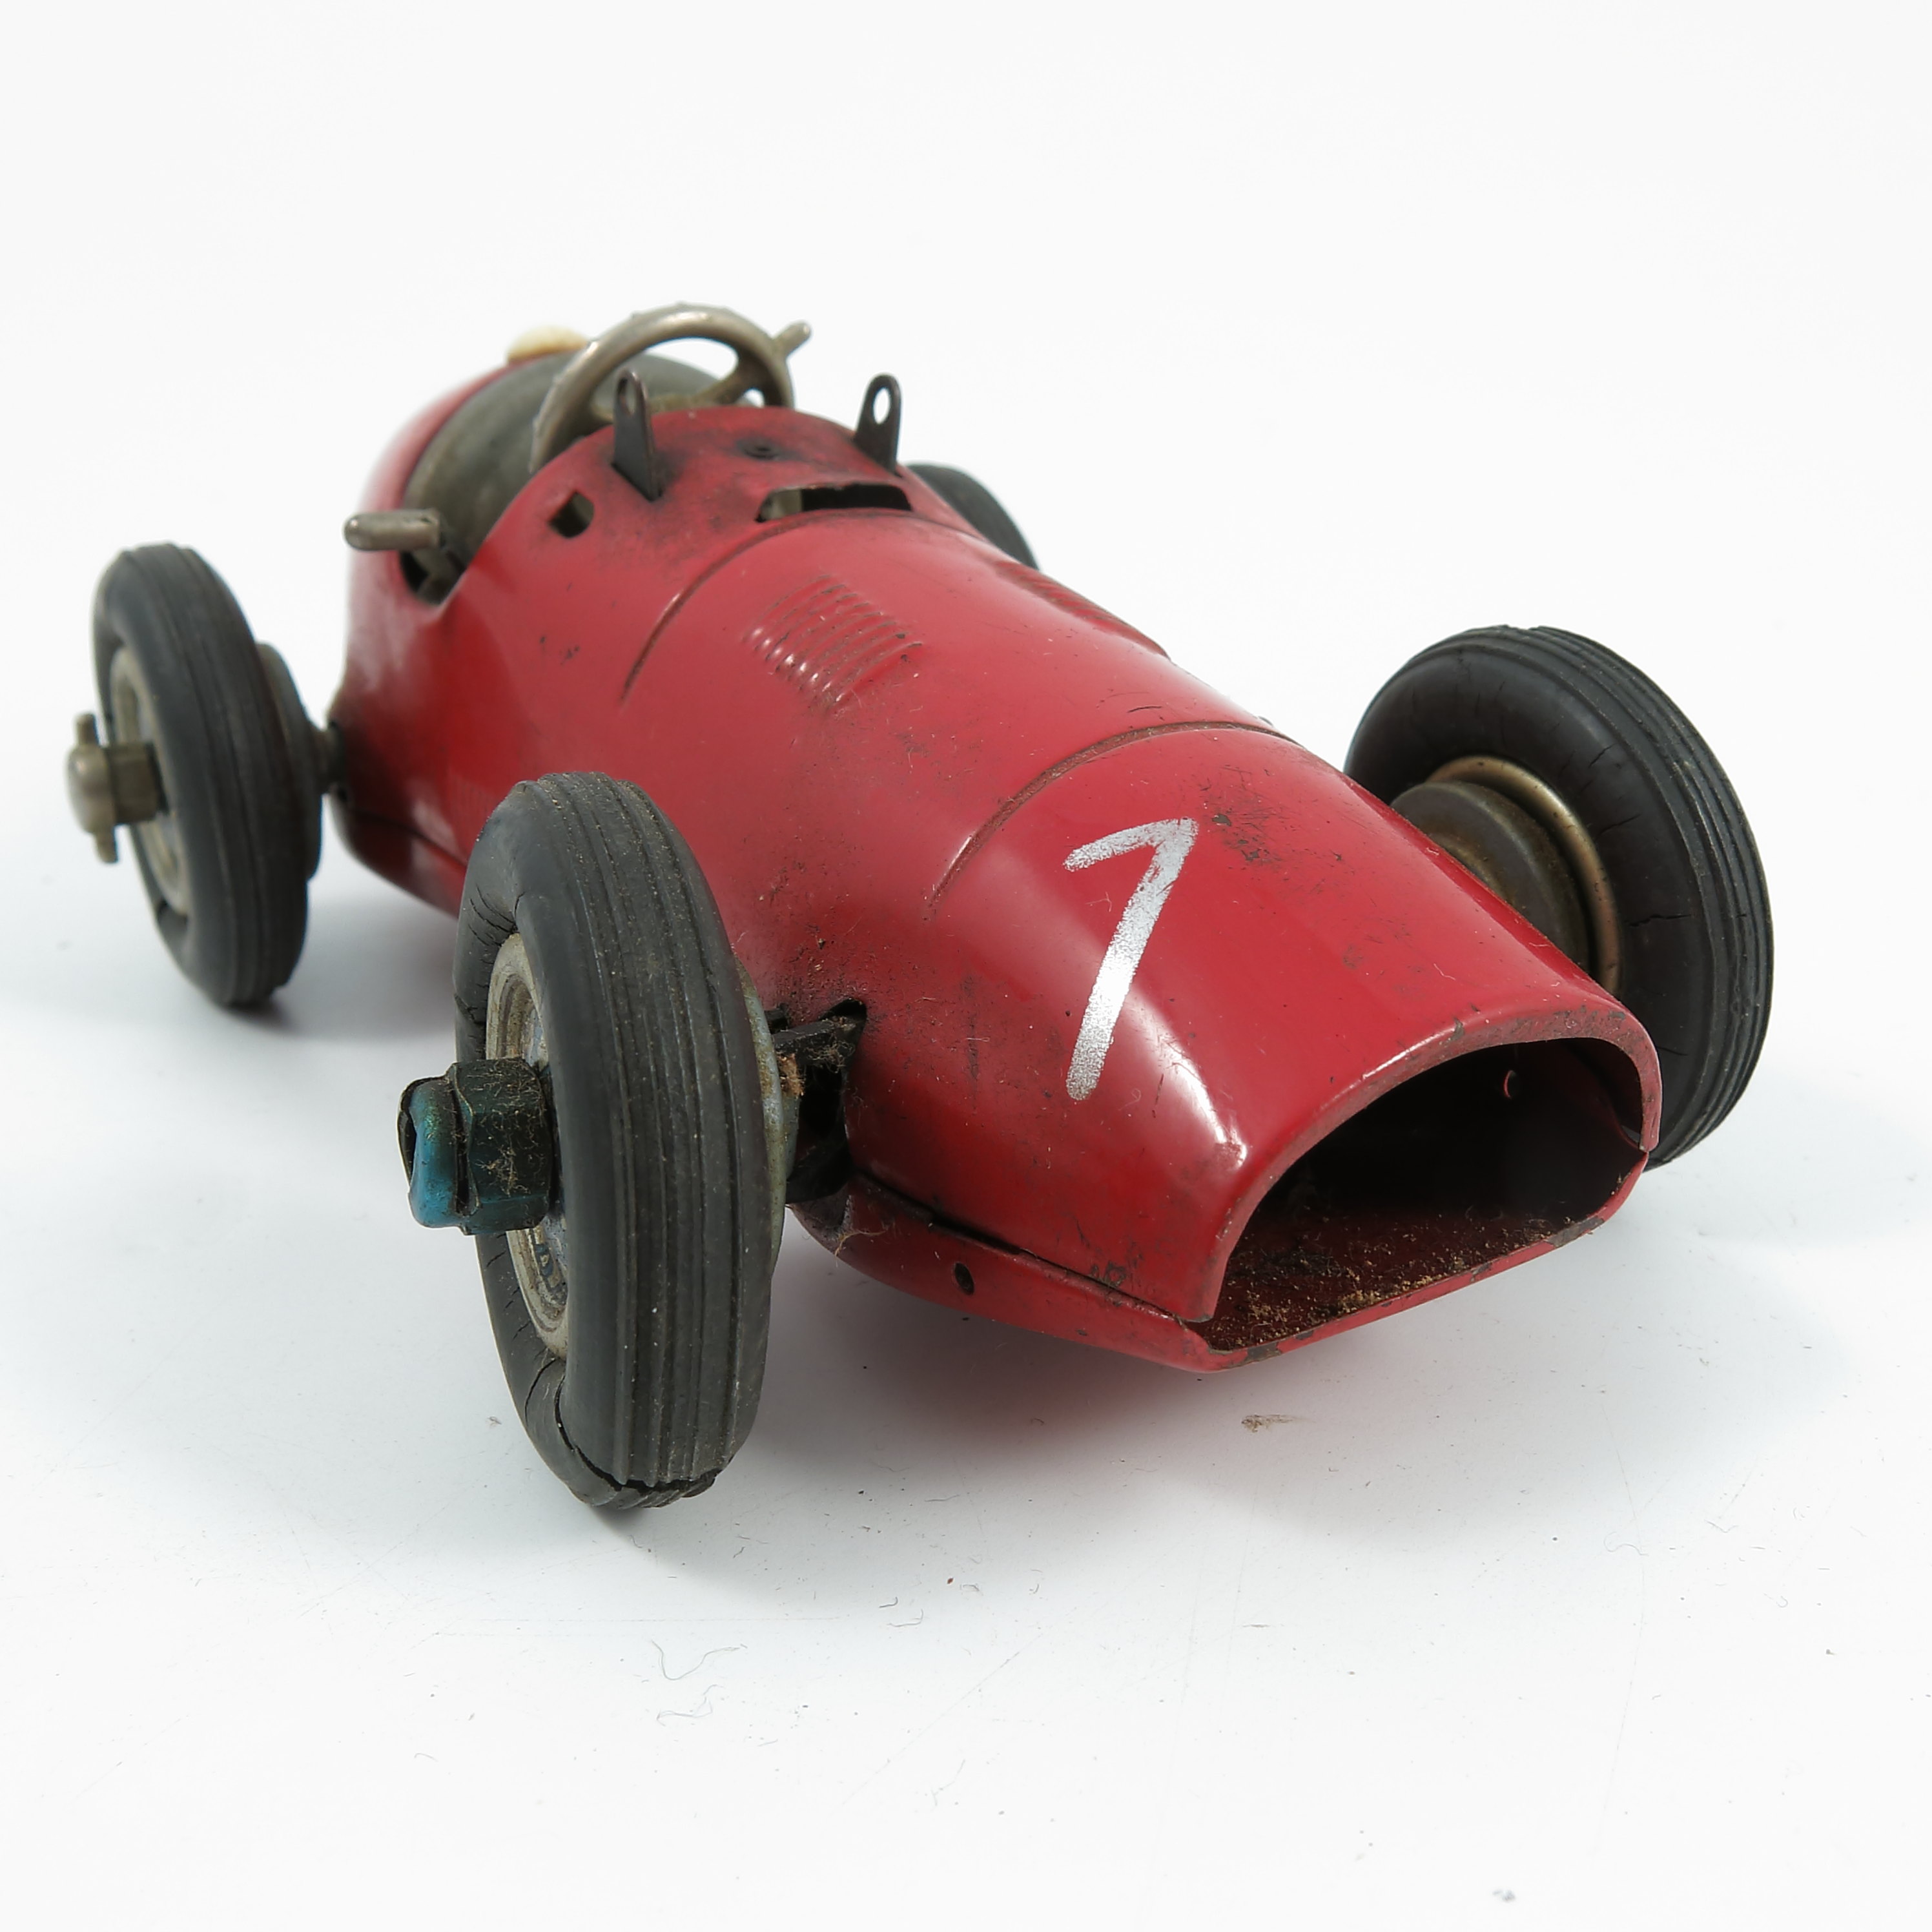 A Schuco Grand Prix Racer, 1070 - Image 3 of 4